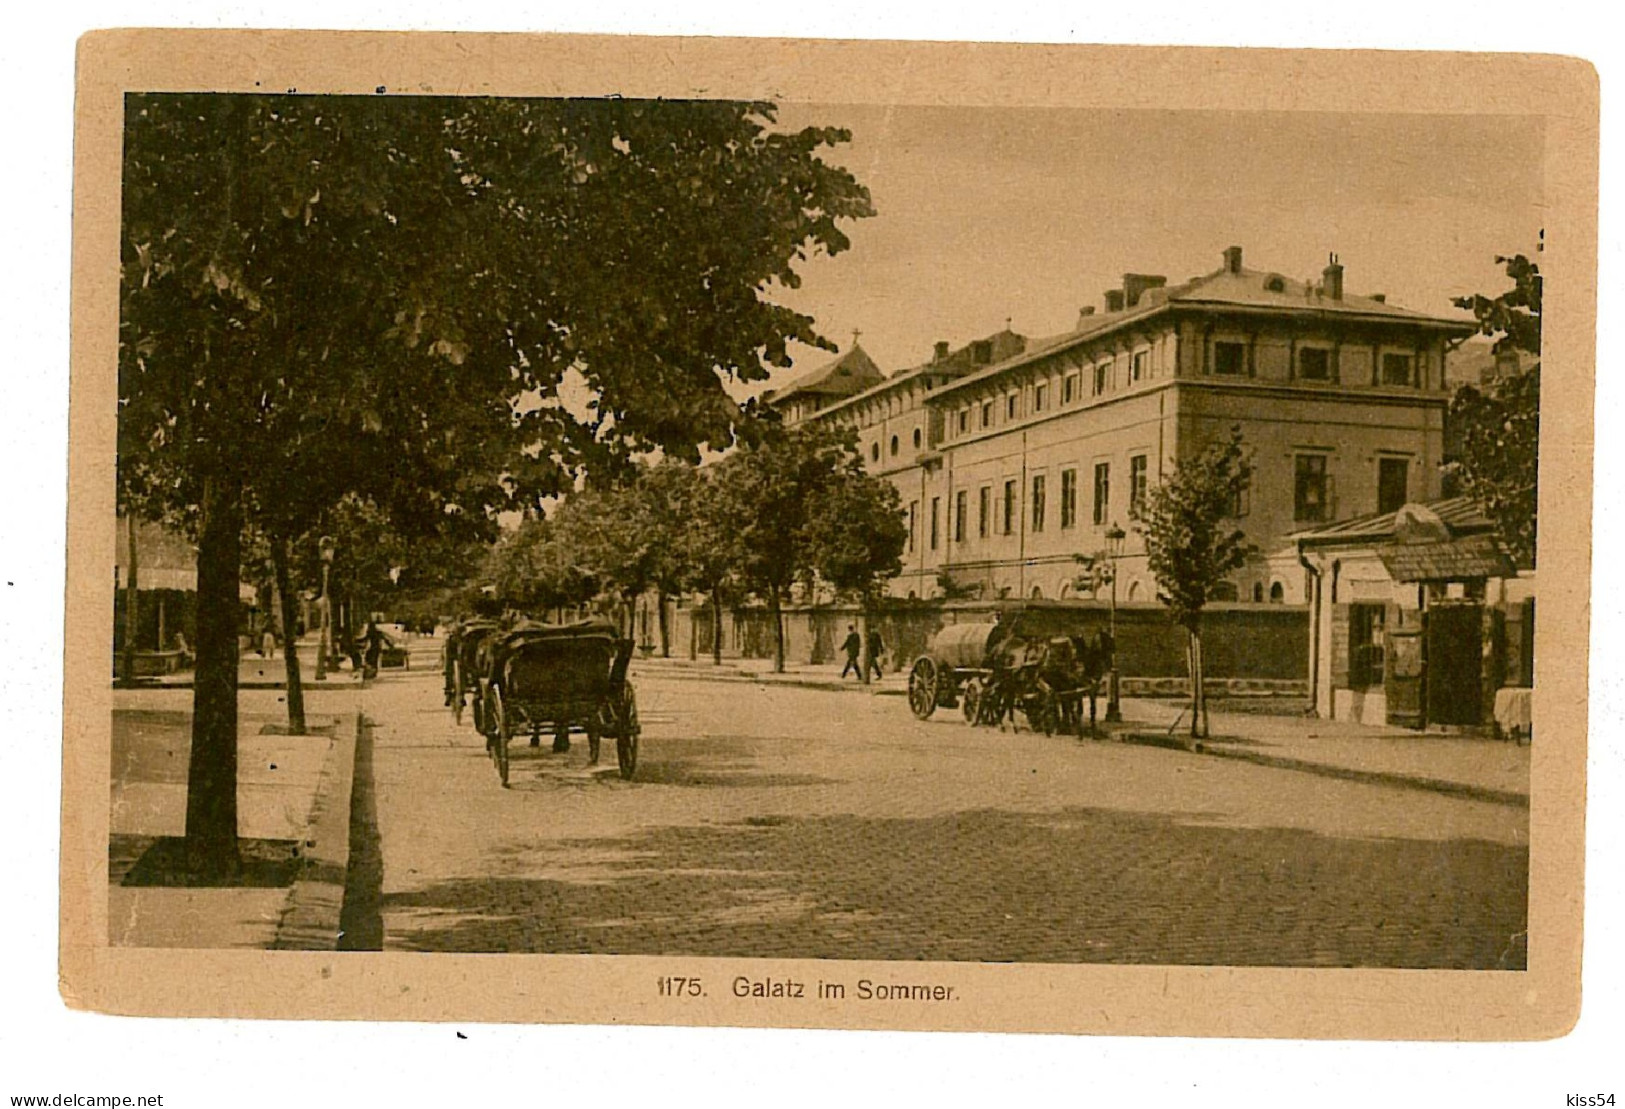 RO 40 - 1271 GALATI, Centrul, Caruta Si Trasuri, Romania - Old Postcard, CENSOR - Used - 1918 - Roemenië